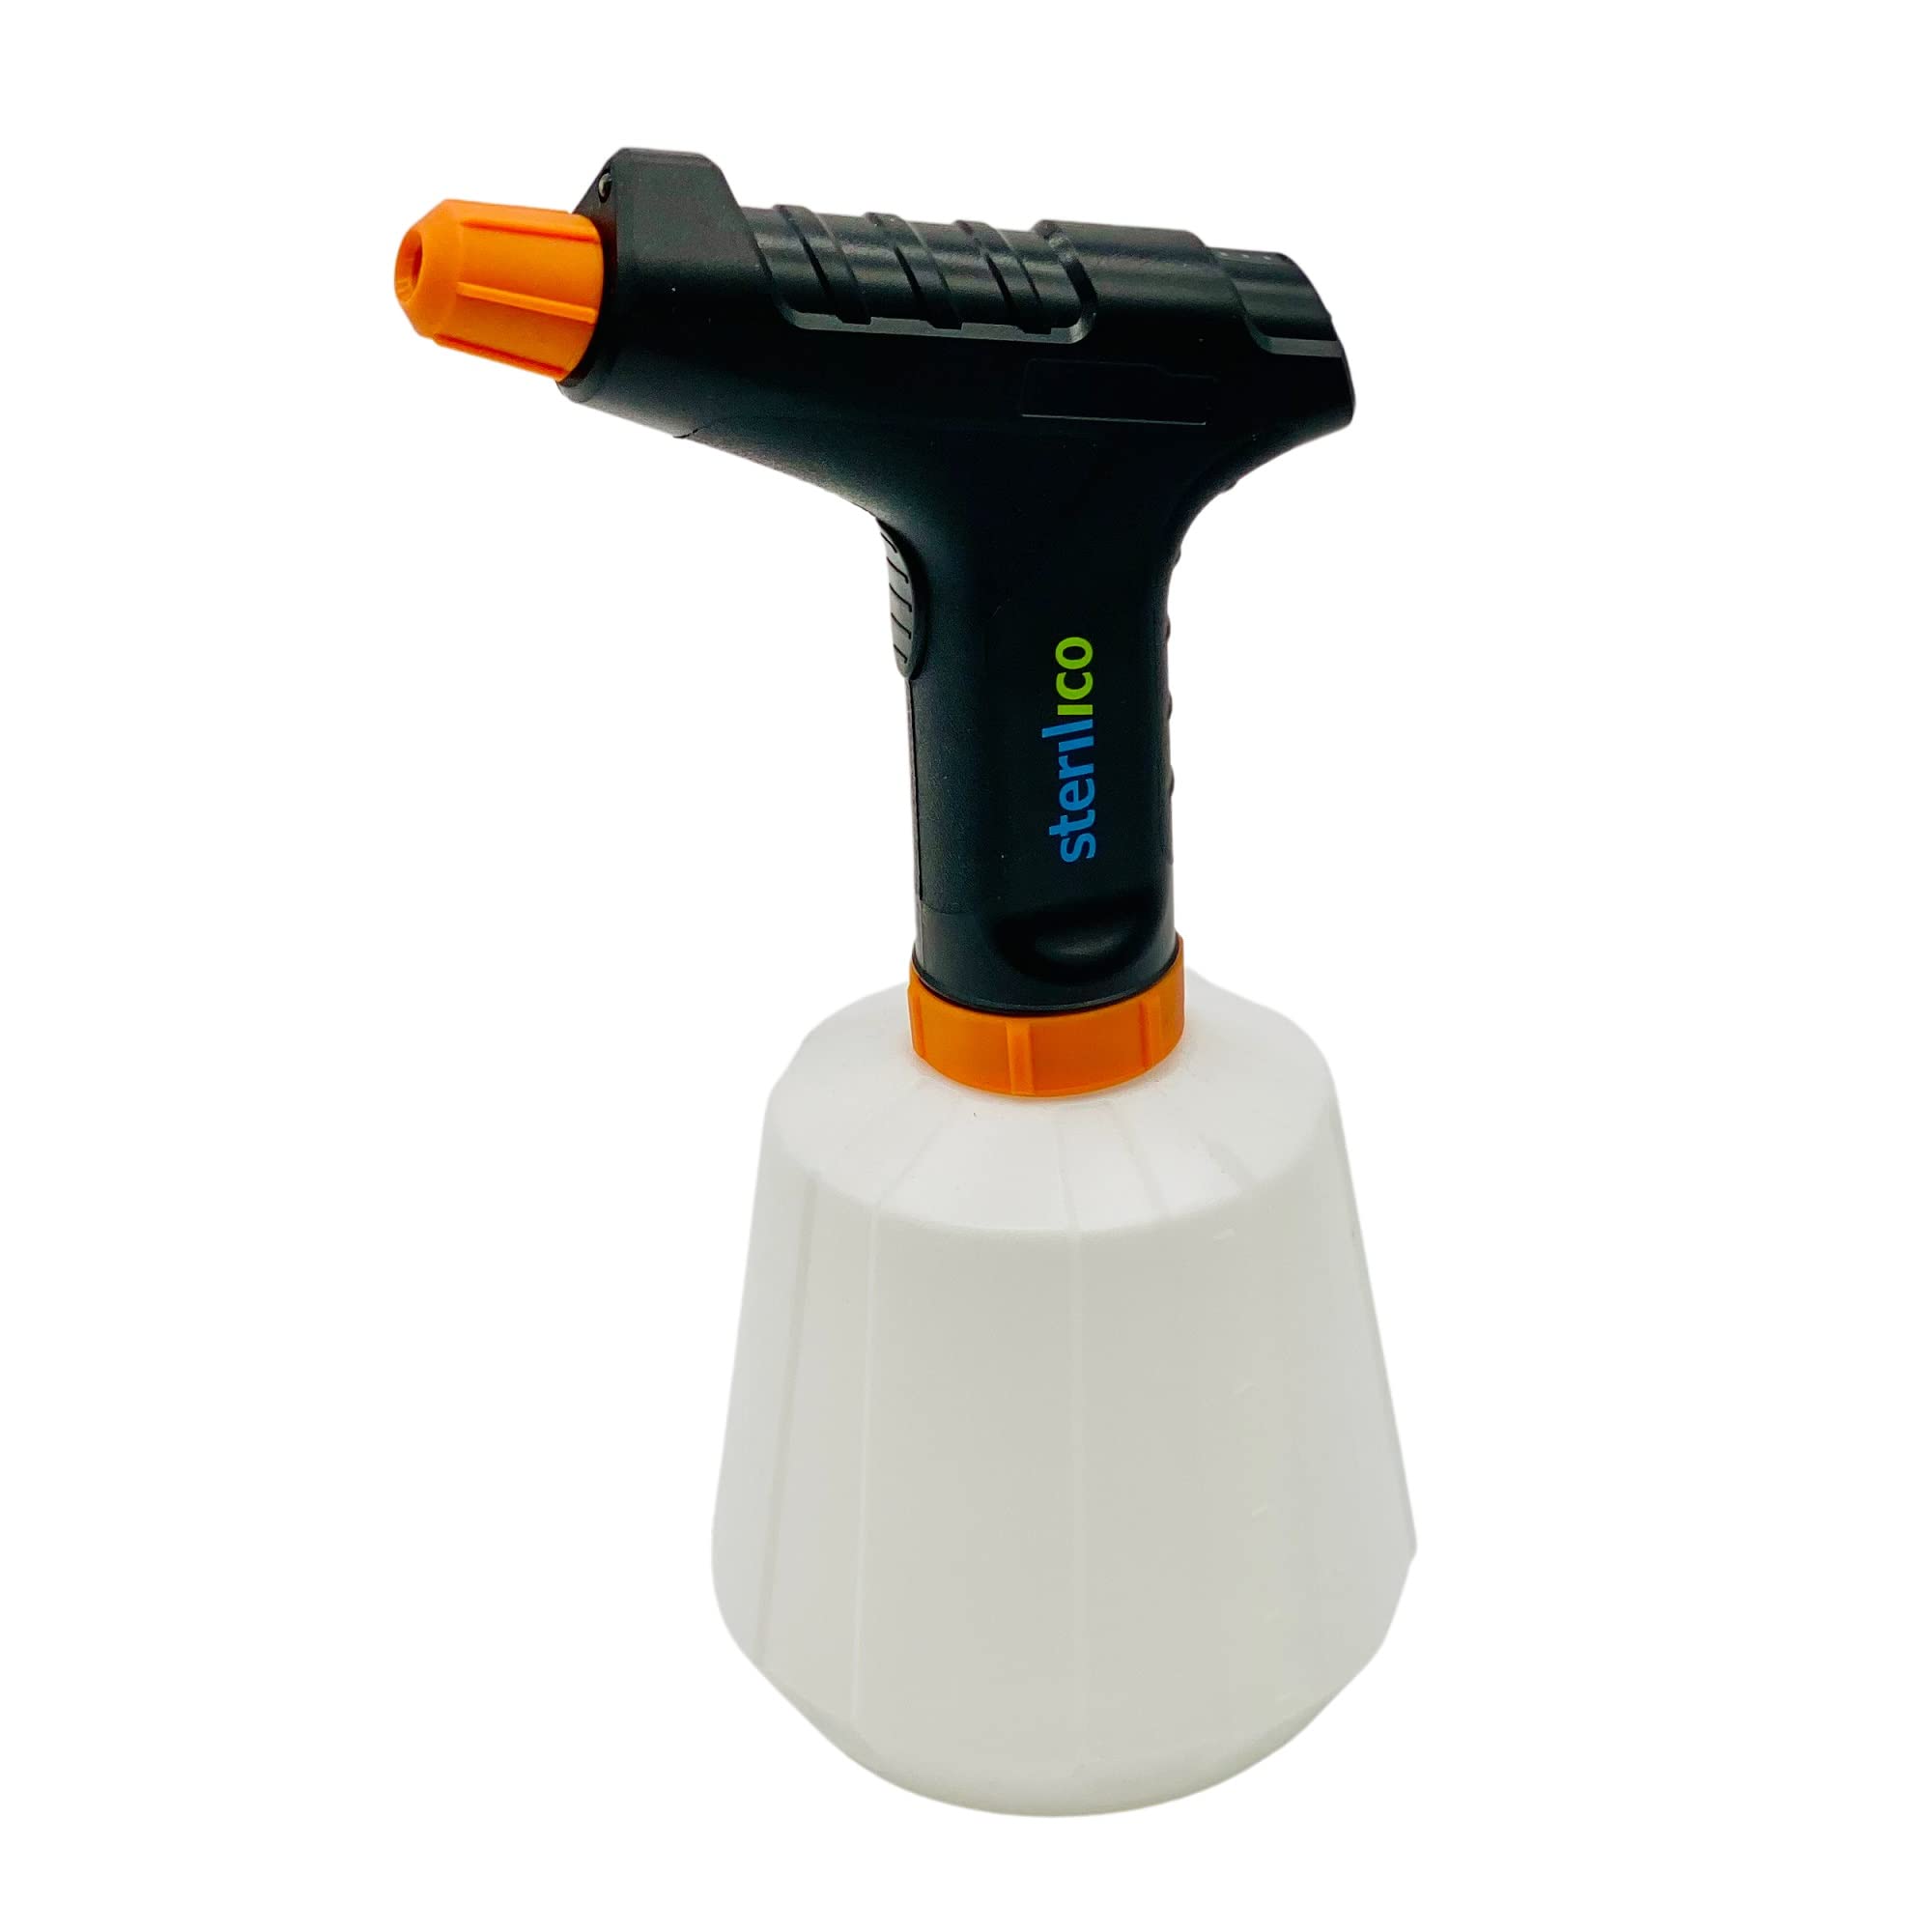 sterilico - Multispray – Multi-purpose Sprayer